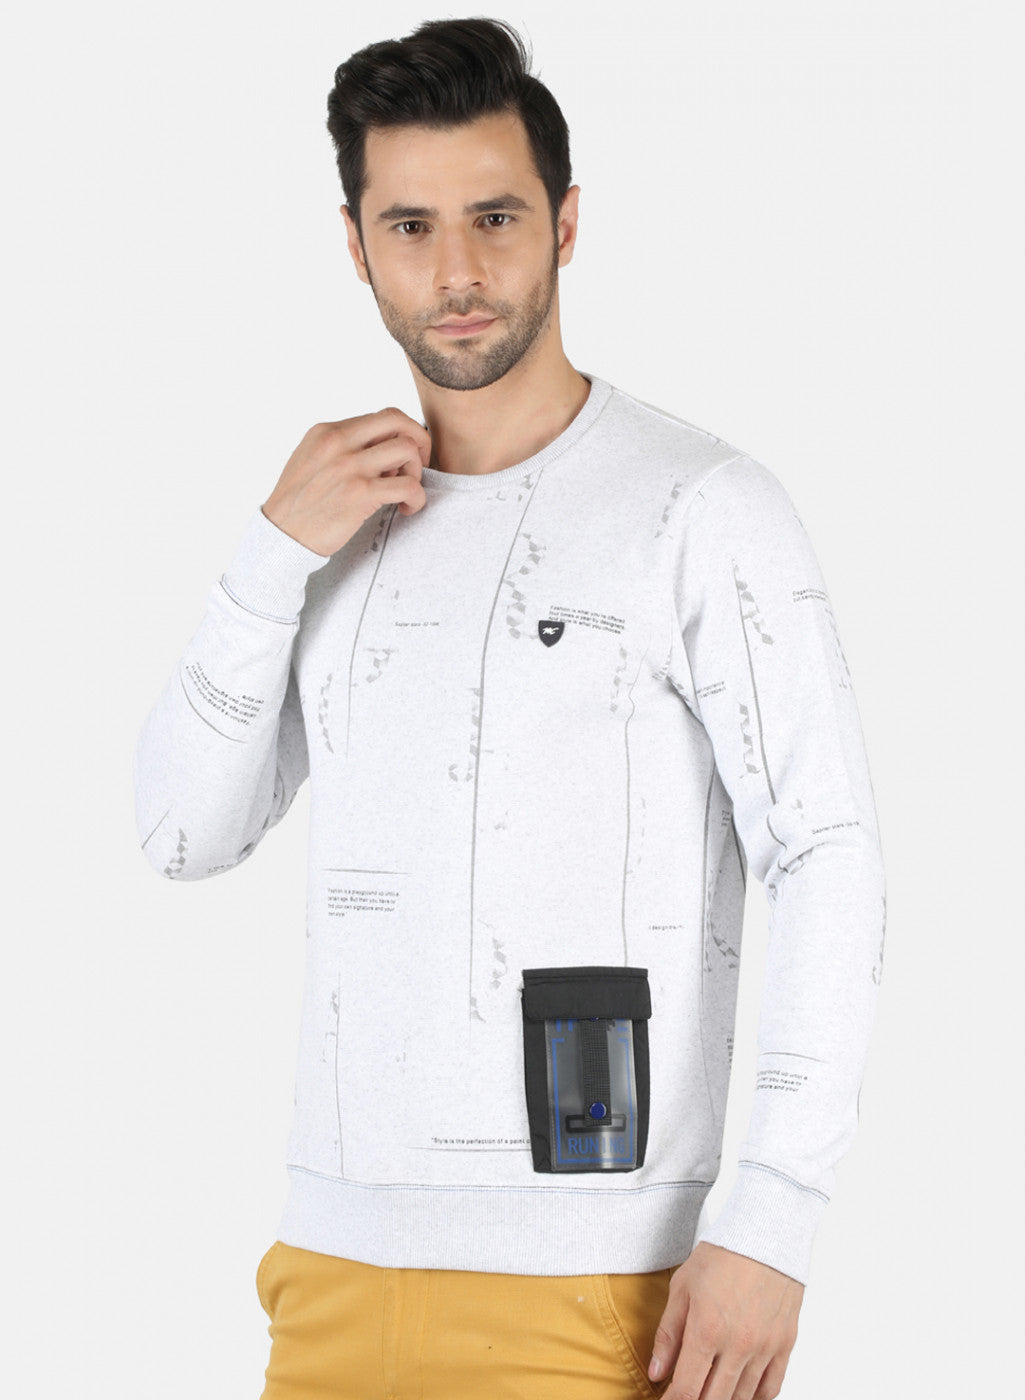 Men White Printed Sweatshirt